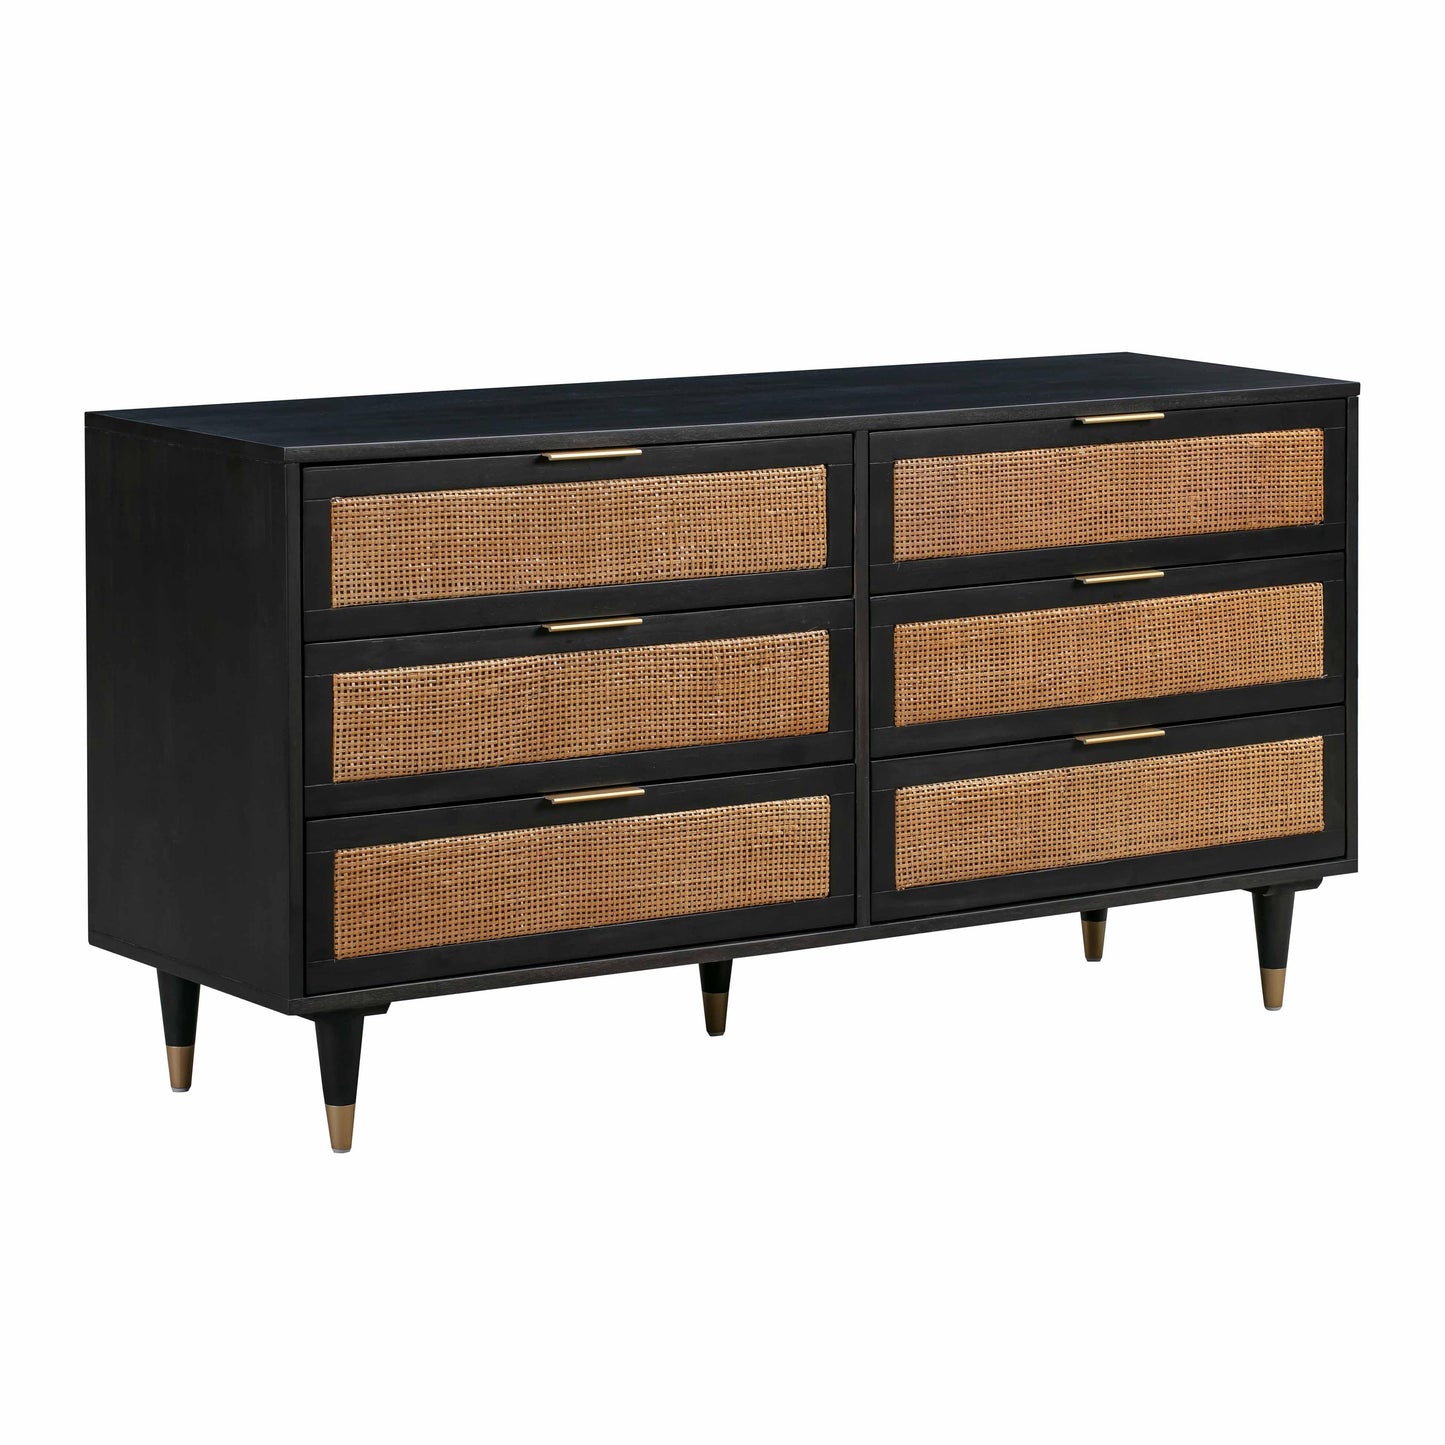 Tov Furniture Sierra Noir 6 Drawer Dresser